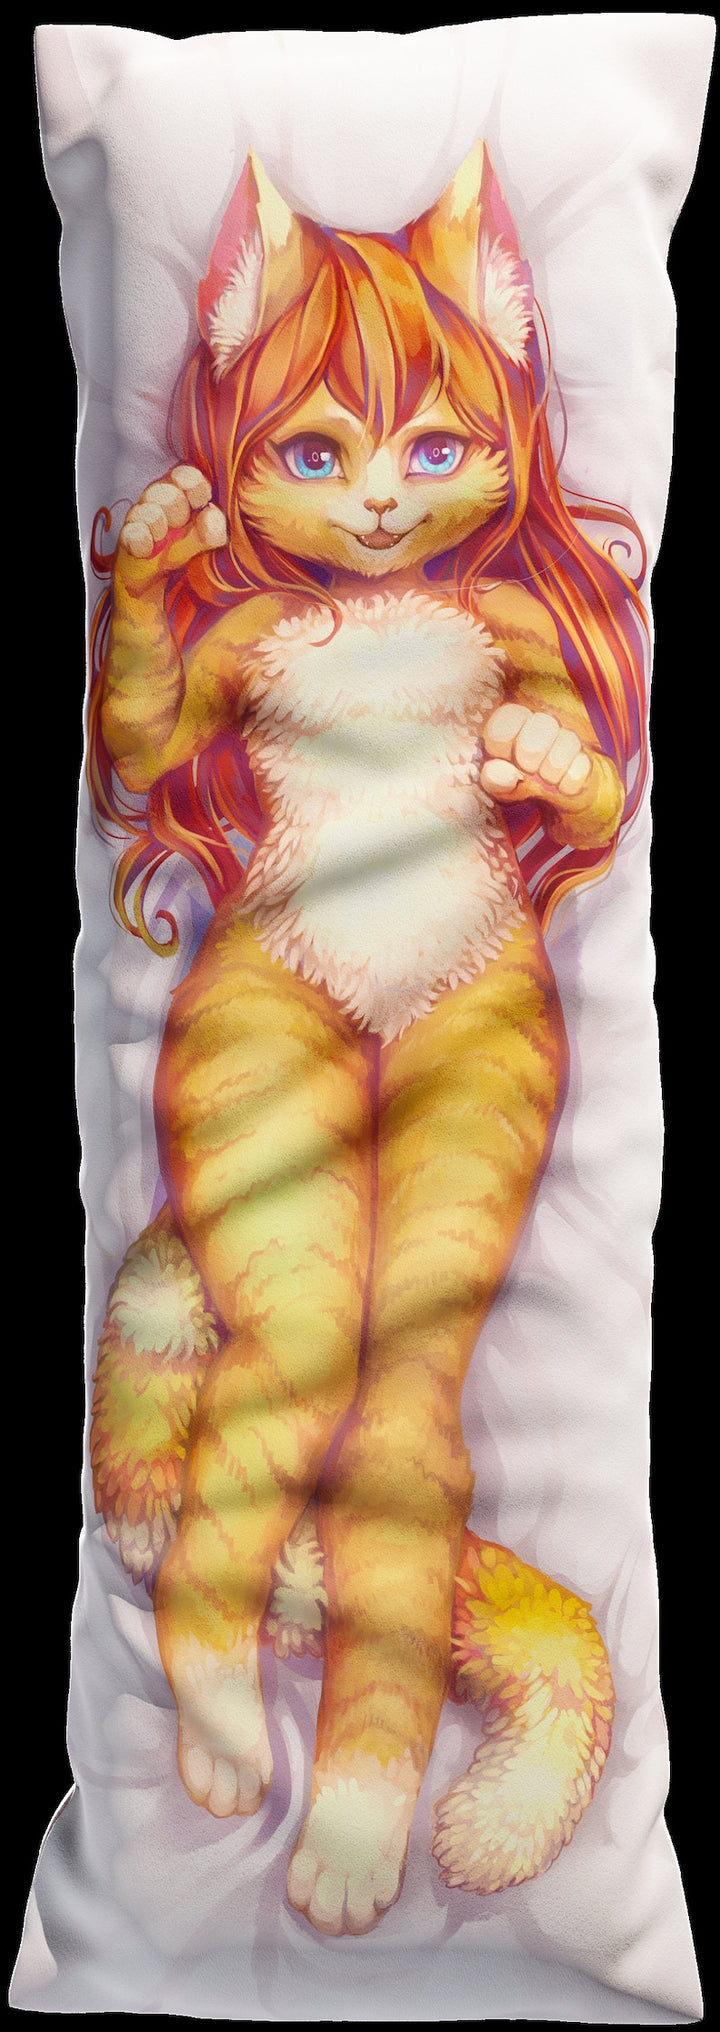 Daki Misha - Art by Saint cocoa - the Cat Dakimakura Furry Body Pillow Cover